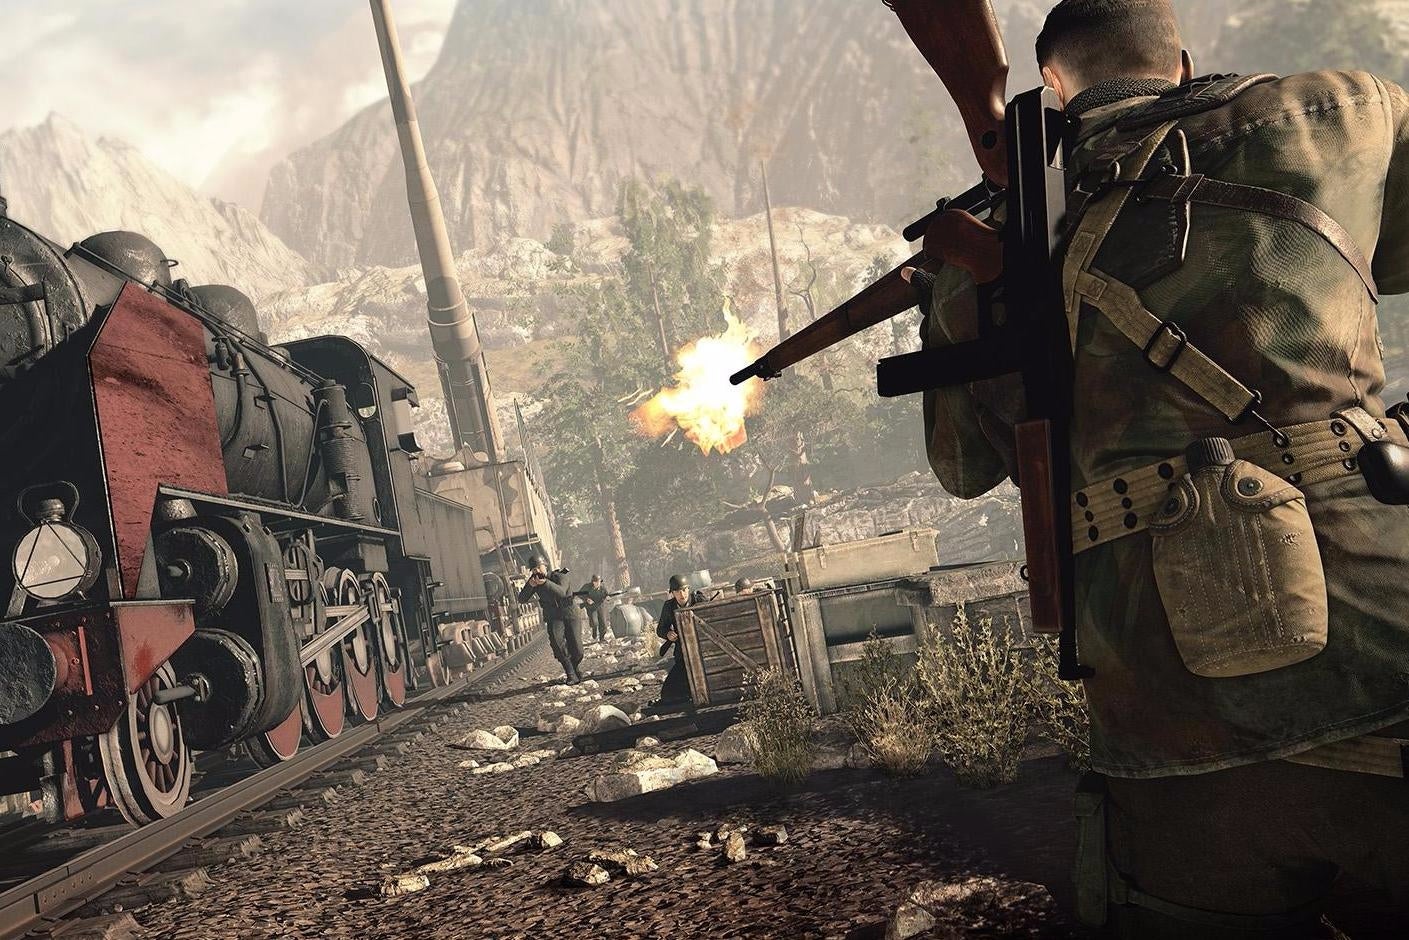 Obrazki dla Sniper Elite 4 - najskuteczniejsza broń dodatkowa